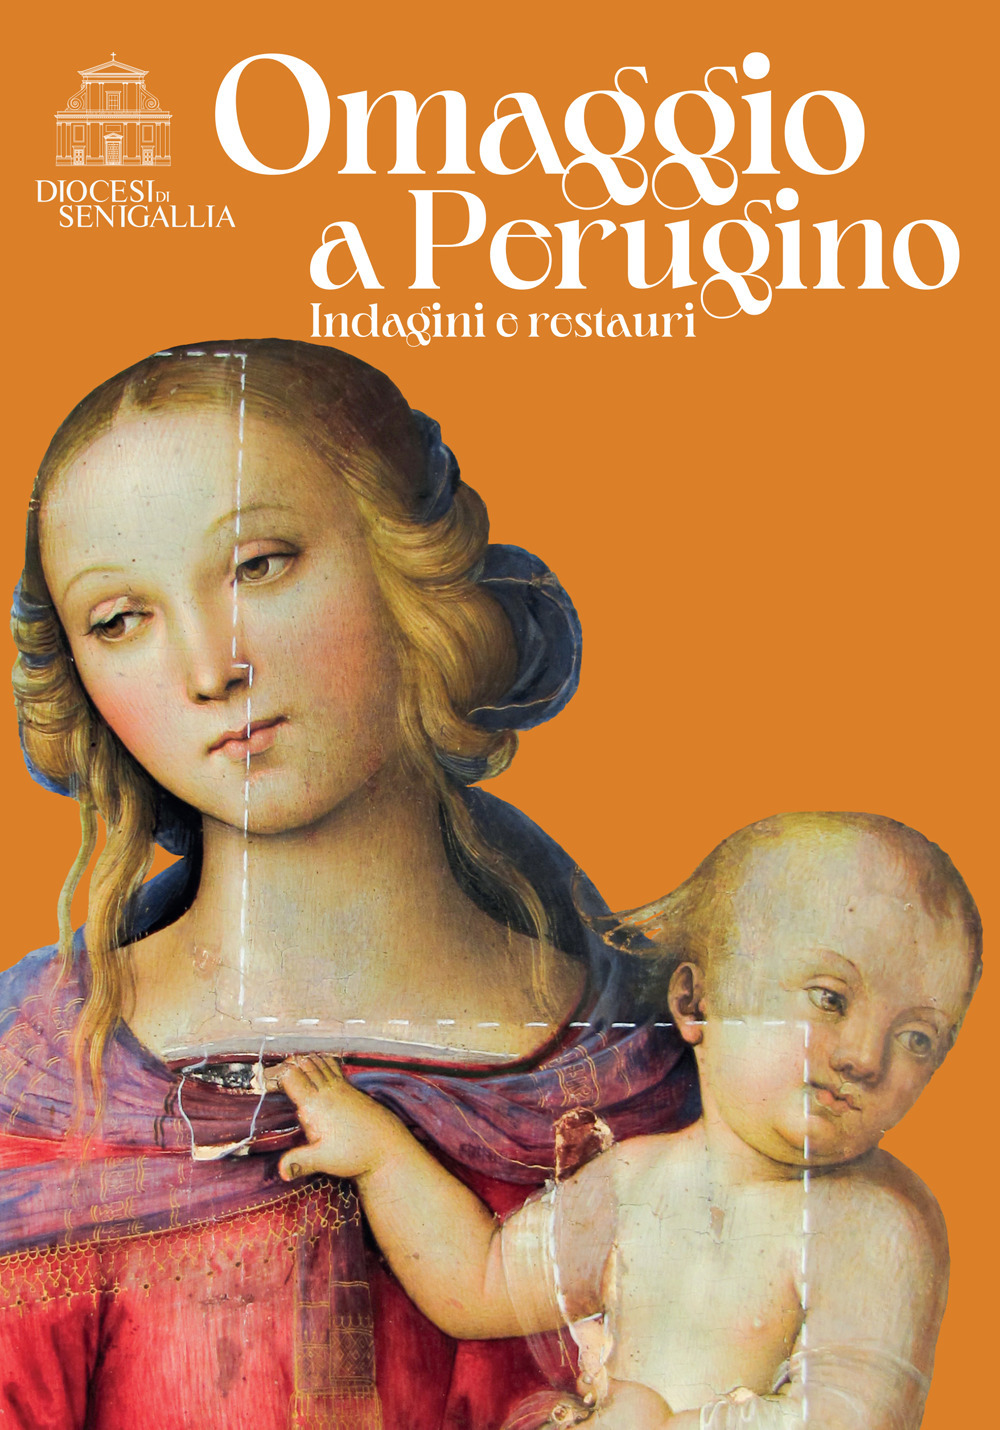 Omaggio a Perugino. Indagini e restauri